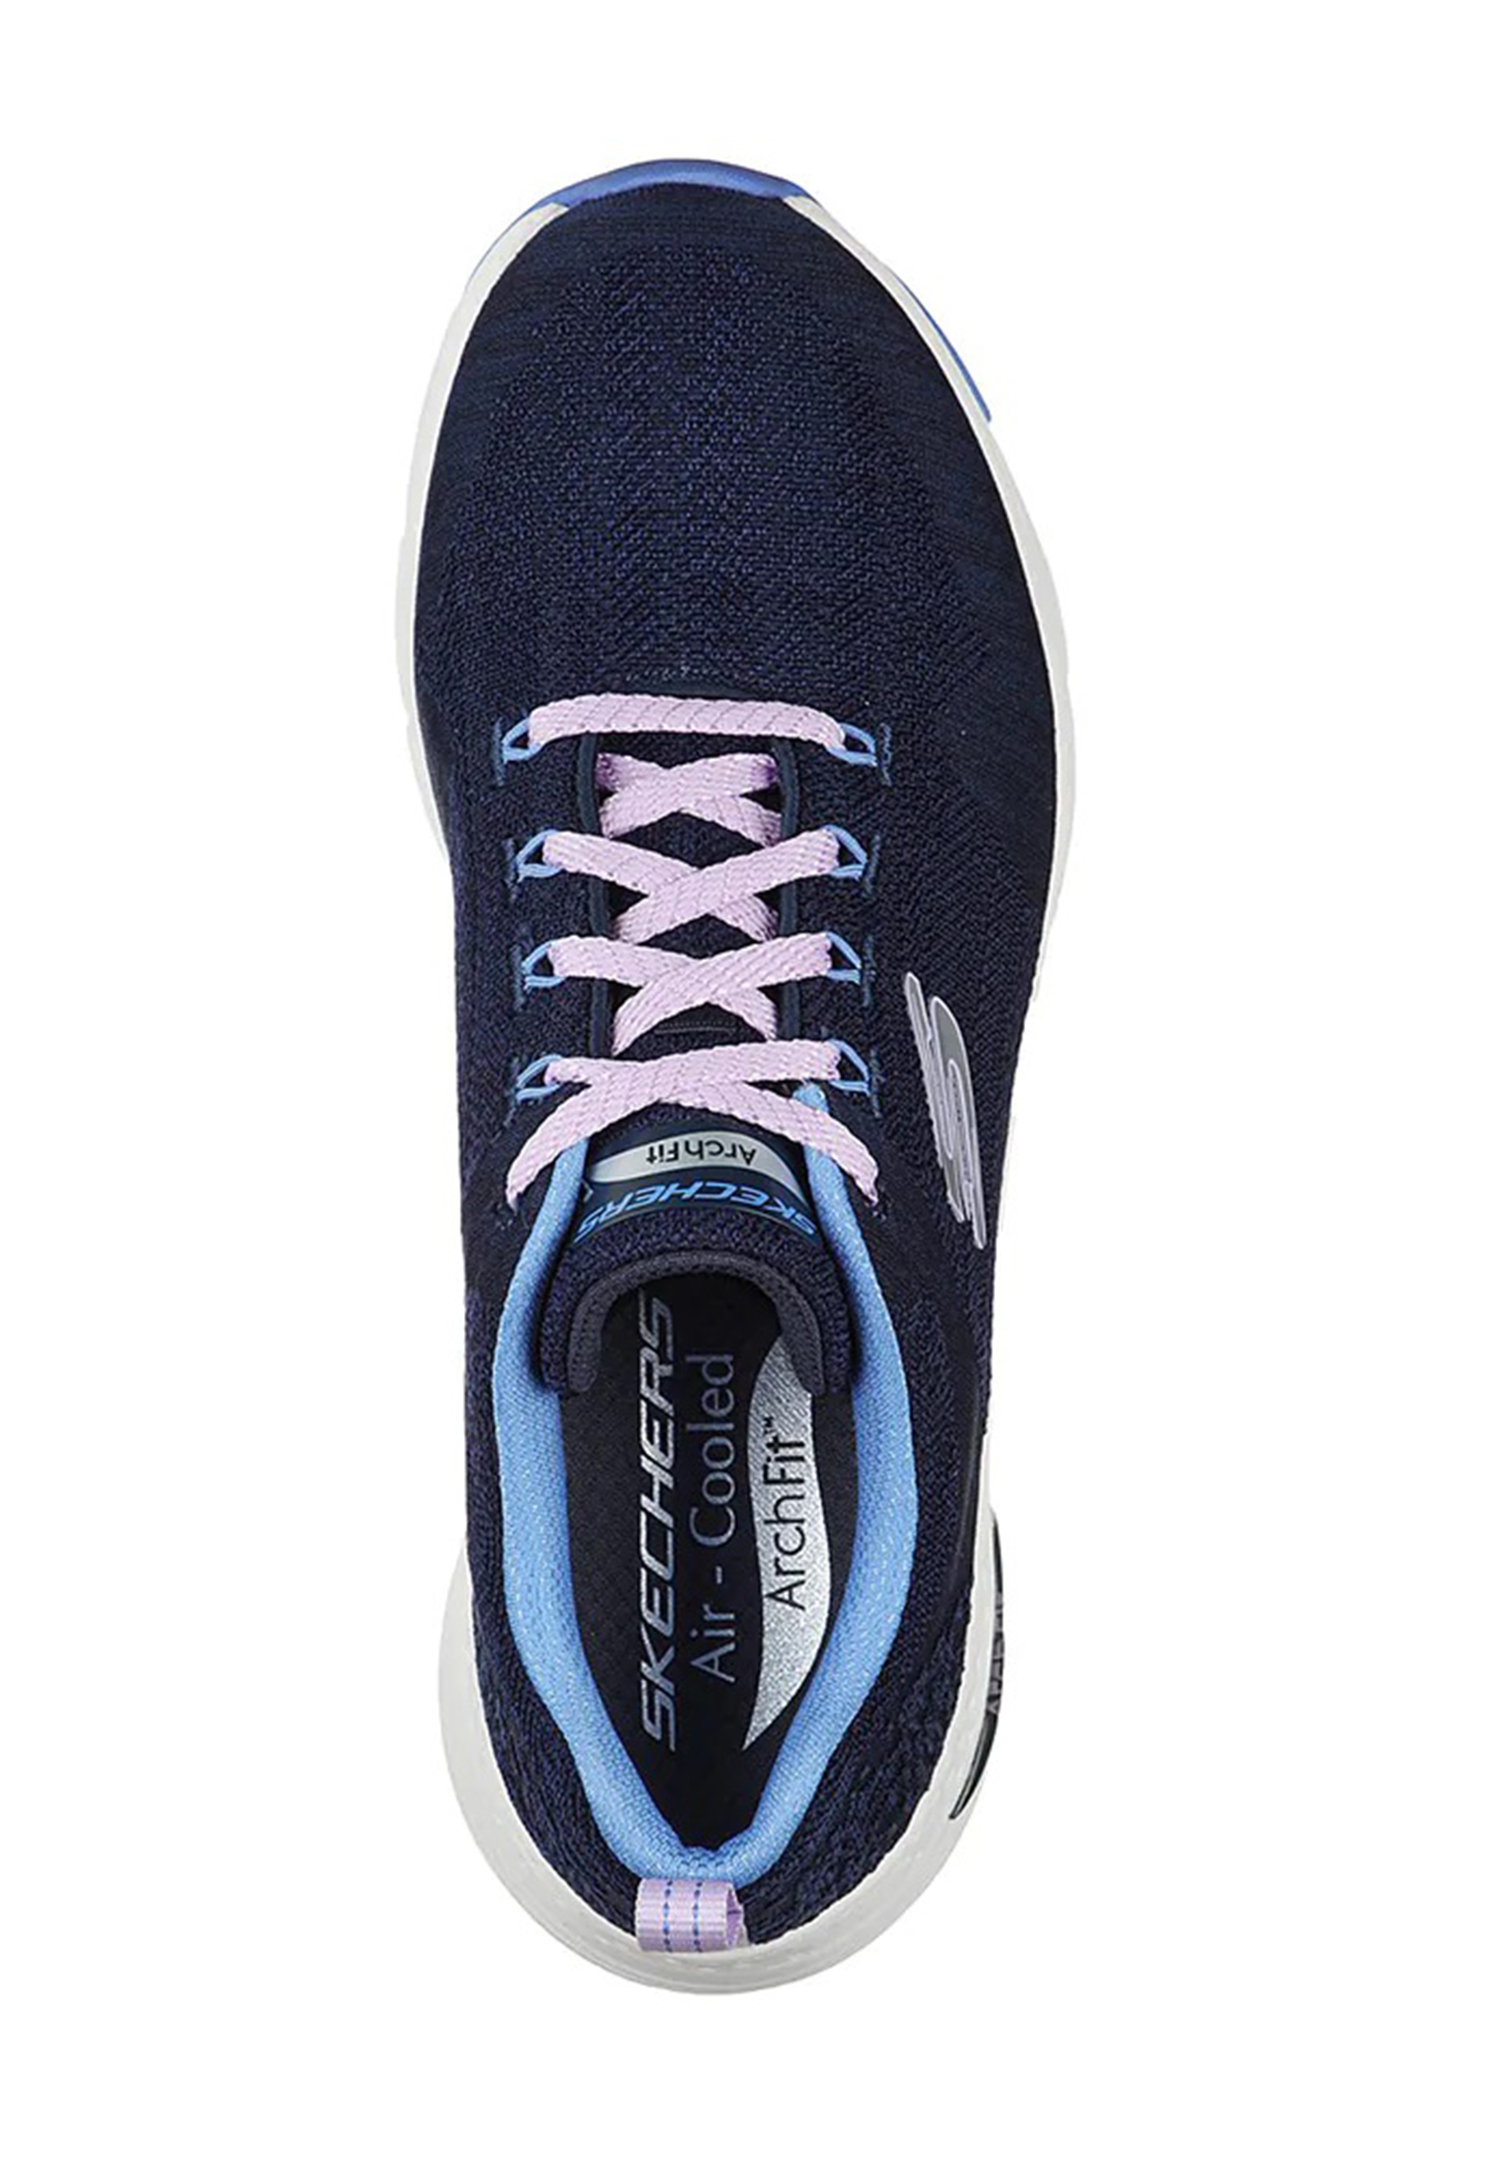 Skechers Arch Fit - COMFY WAVE Damen Sneaker 149414 NVBL blau